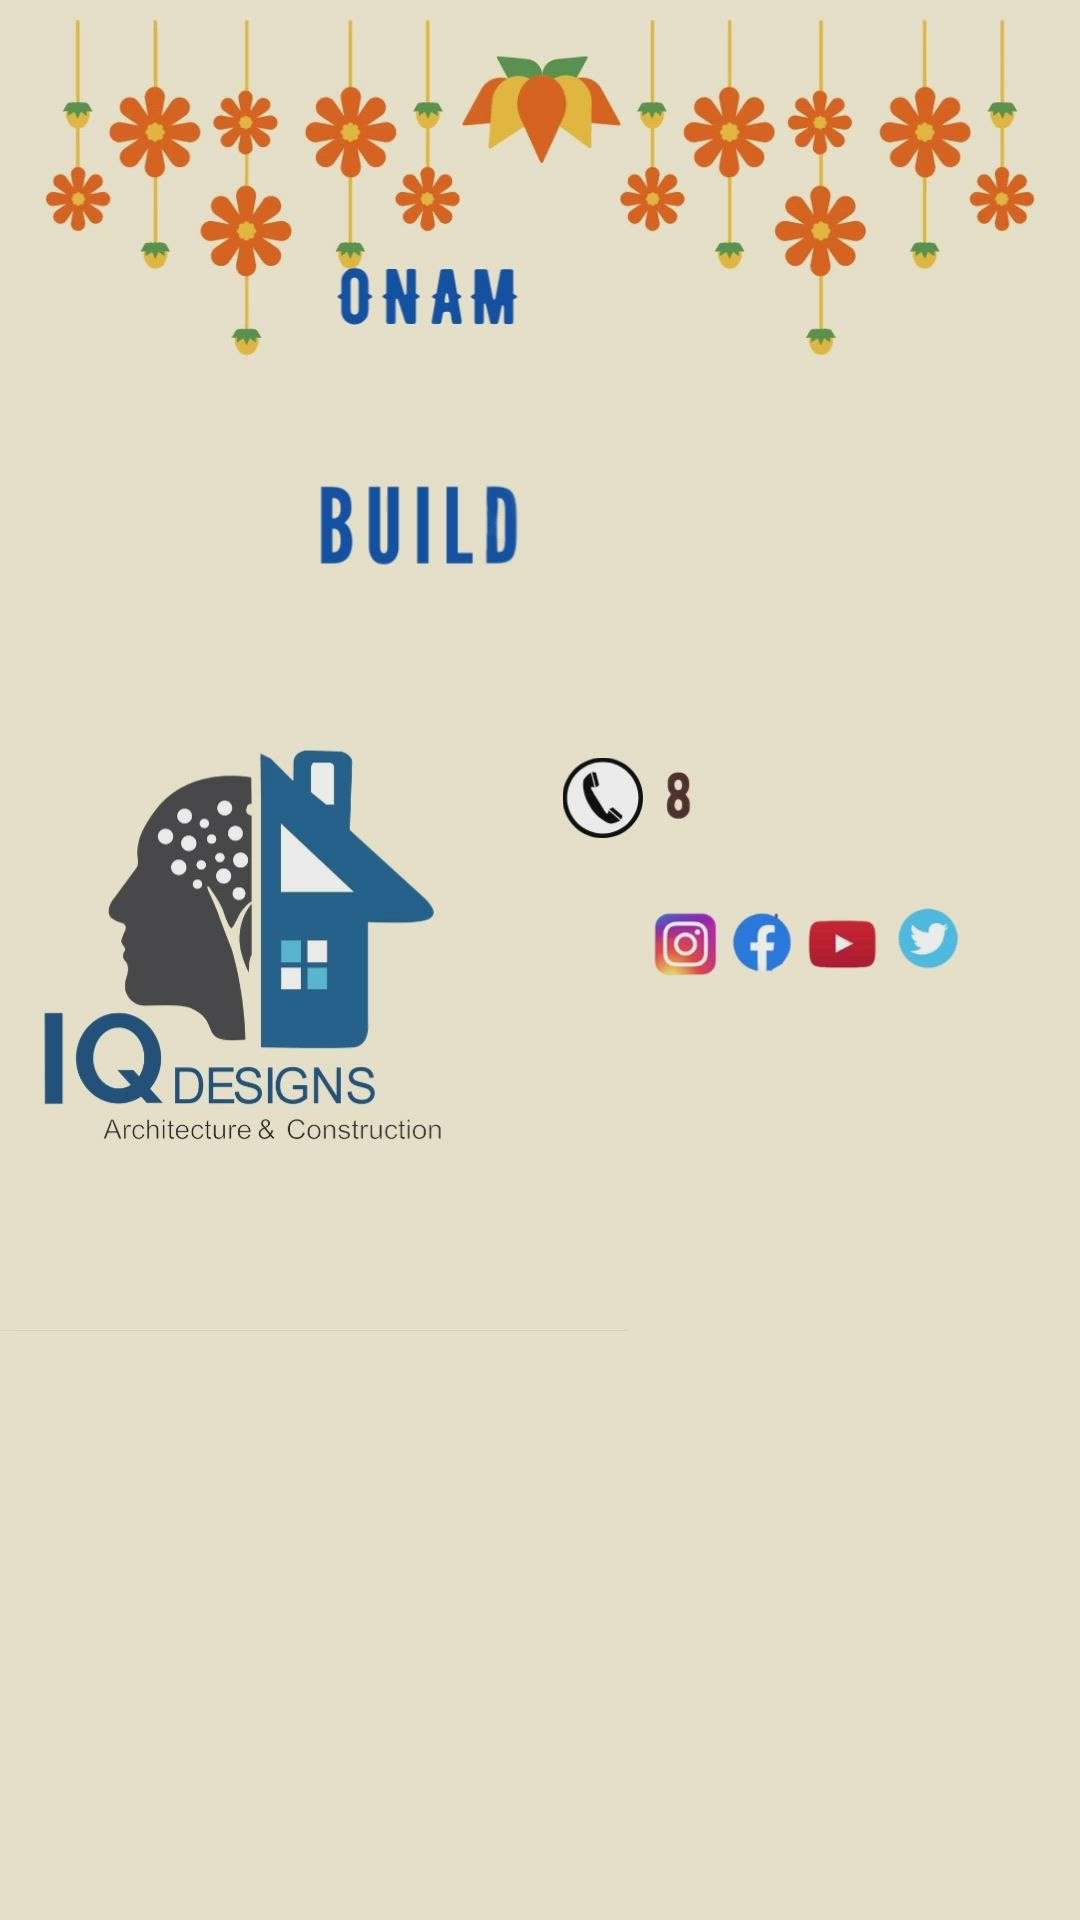 Onam Days Are Coming !!!! ❤️😊
ഈ ഓണത്തിന് നിങ്ങളുടെ സ്വപ്നം നിറവേറ്റു IQ Designs നൊപ്പം 😊🙌

For Construction & Other Details -
Contact - 8848721023

#onam #offersale #construction #builders